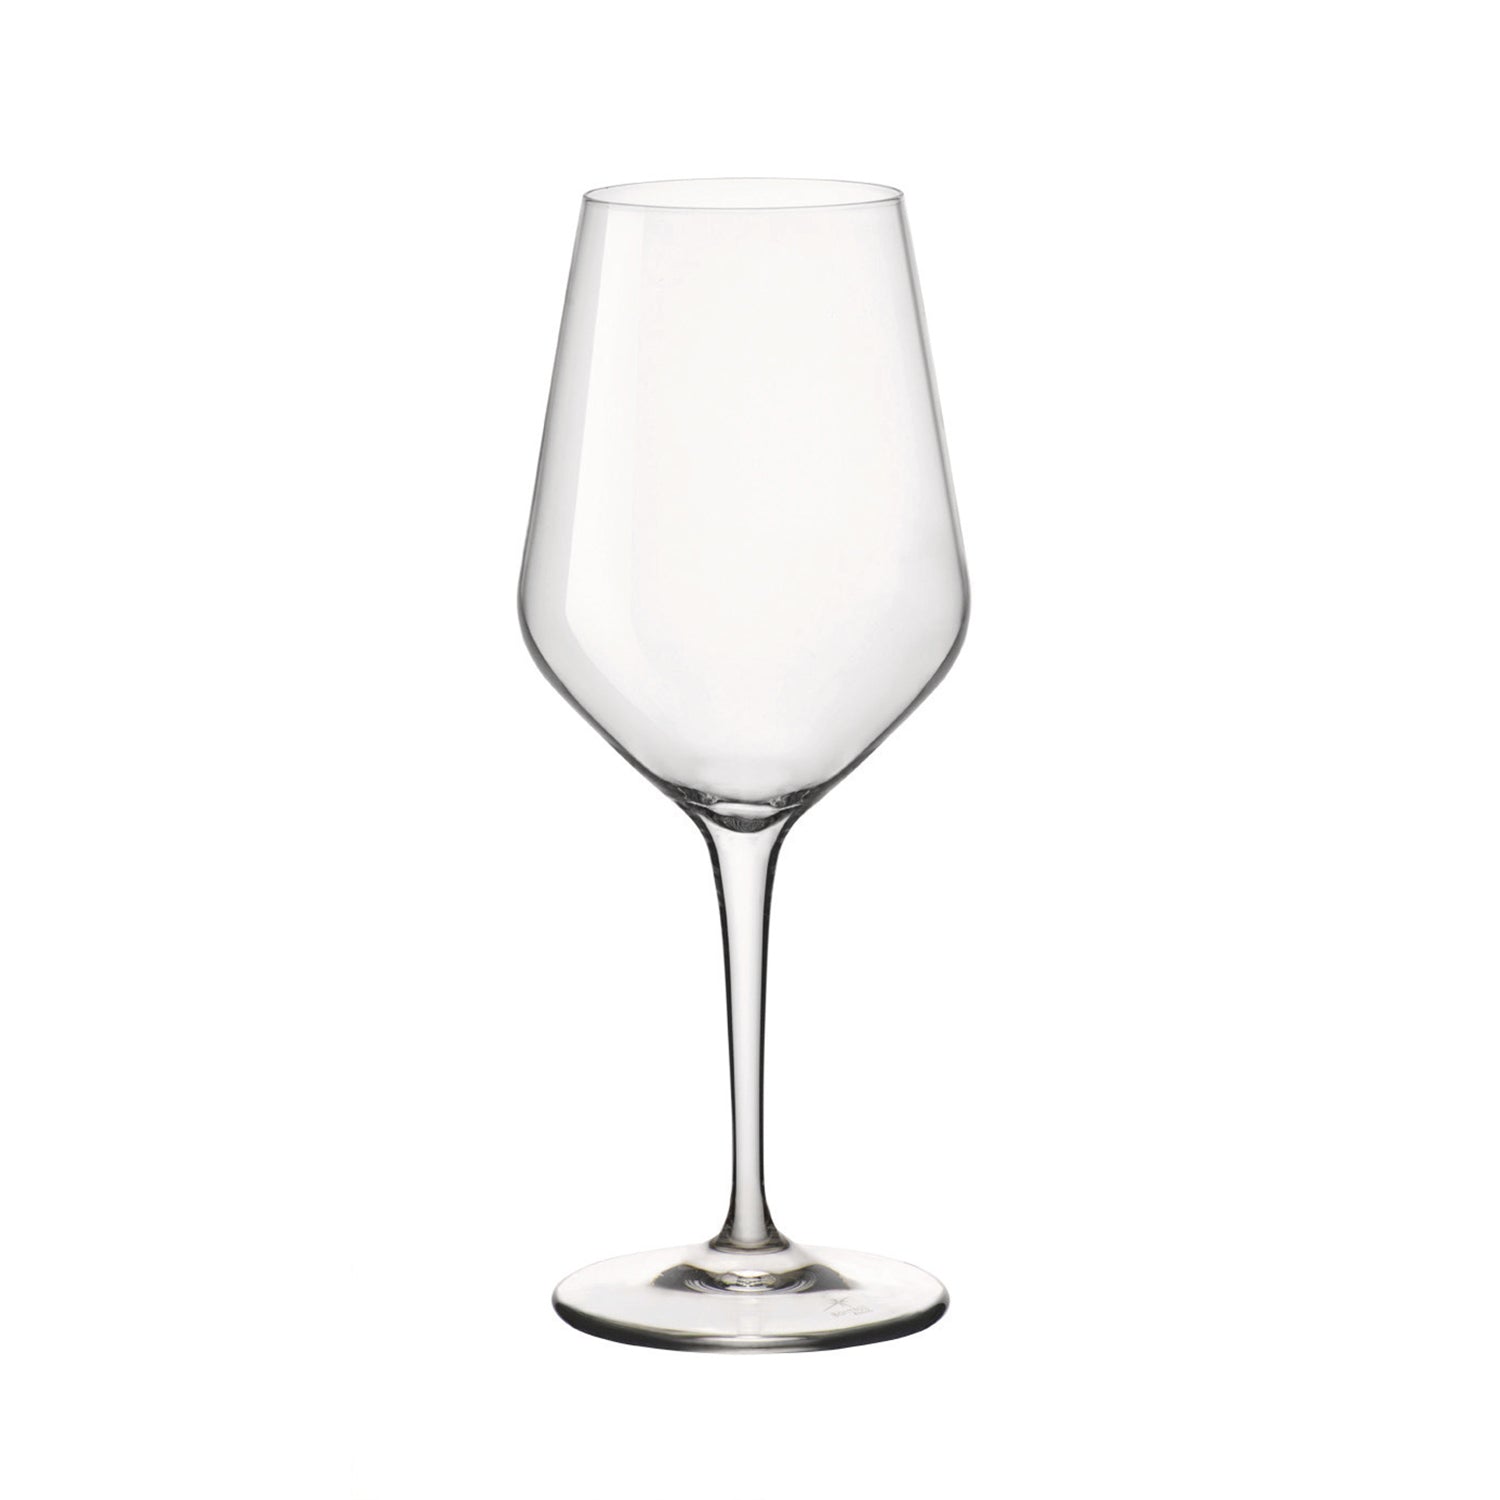 Electra 14.75 oz. Medium Wine Glasses (Set of 6)